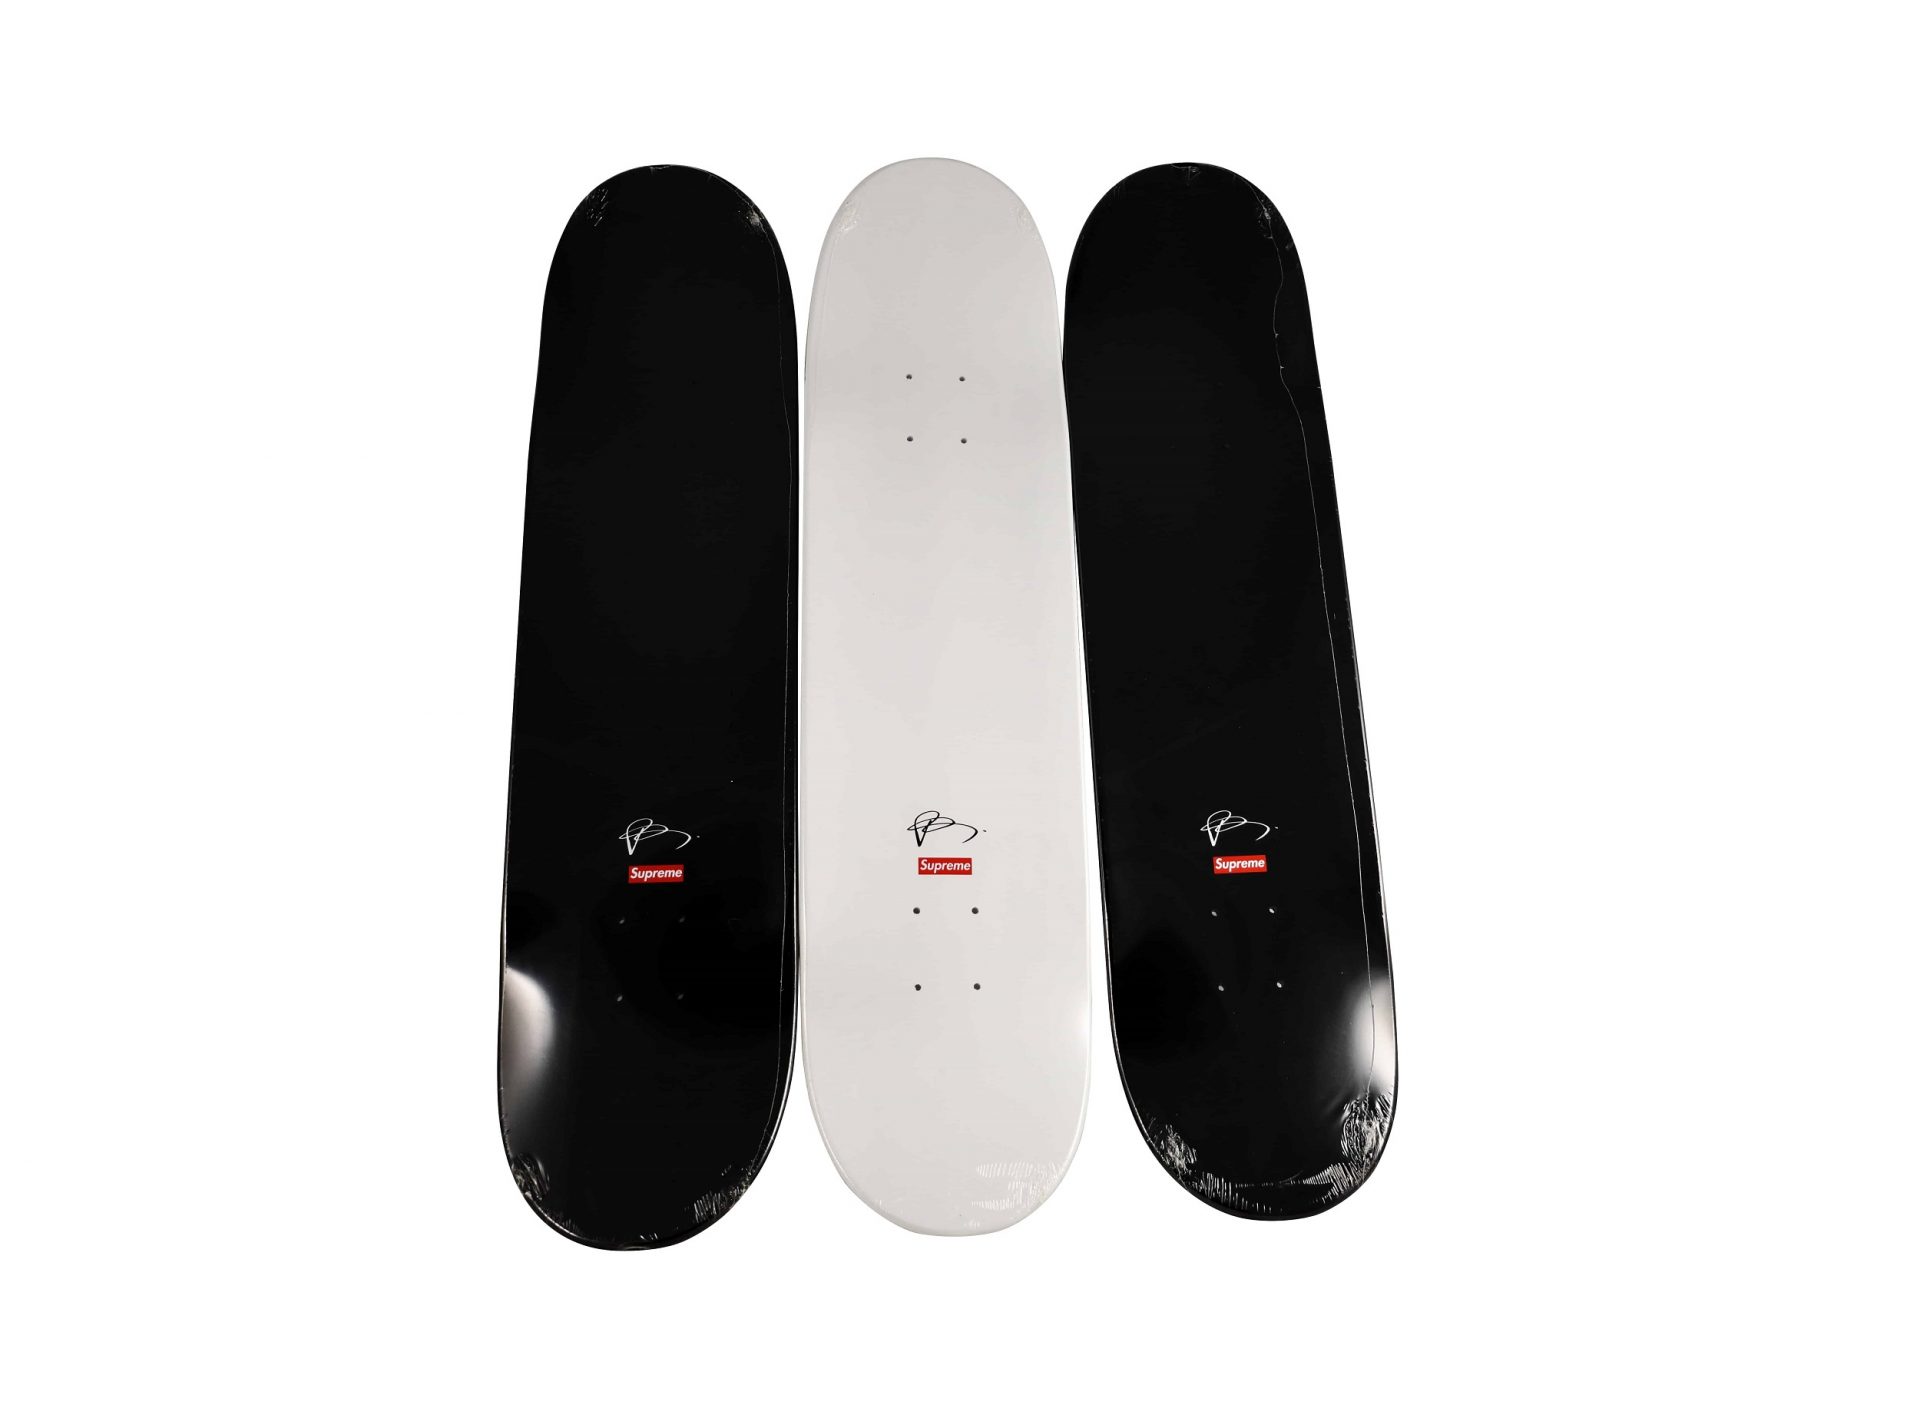 Robert Longo x Supreme Skateboard Deck Set of 3